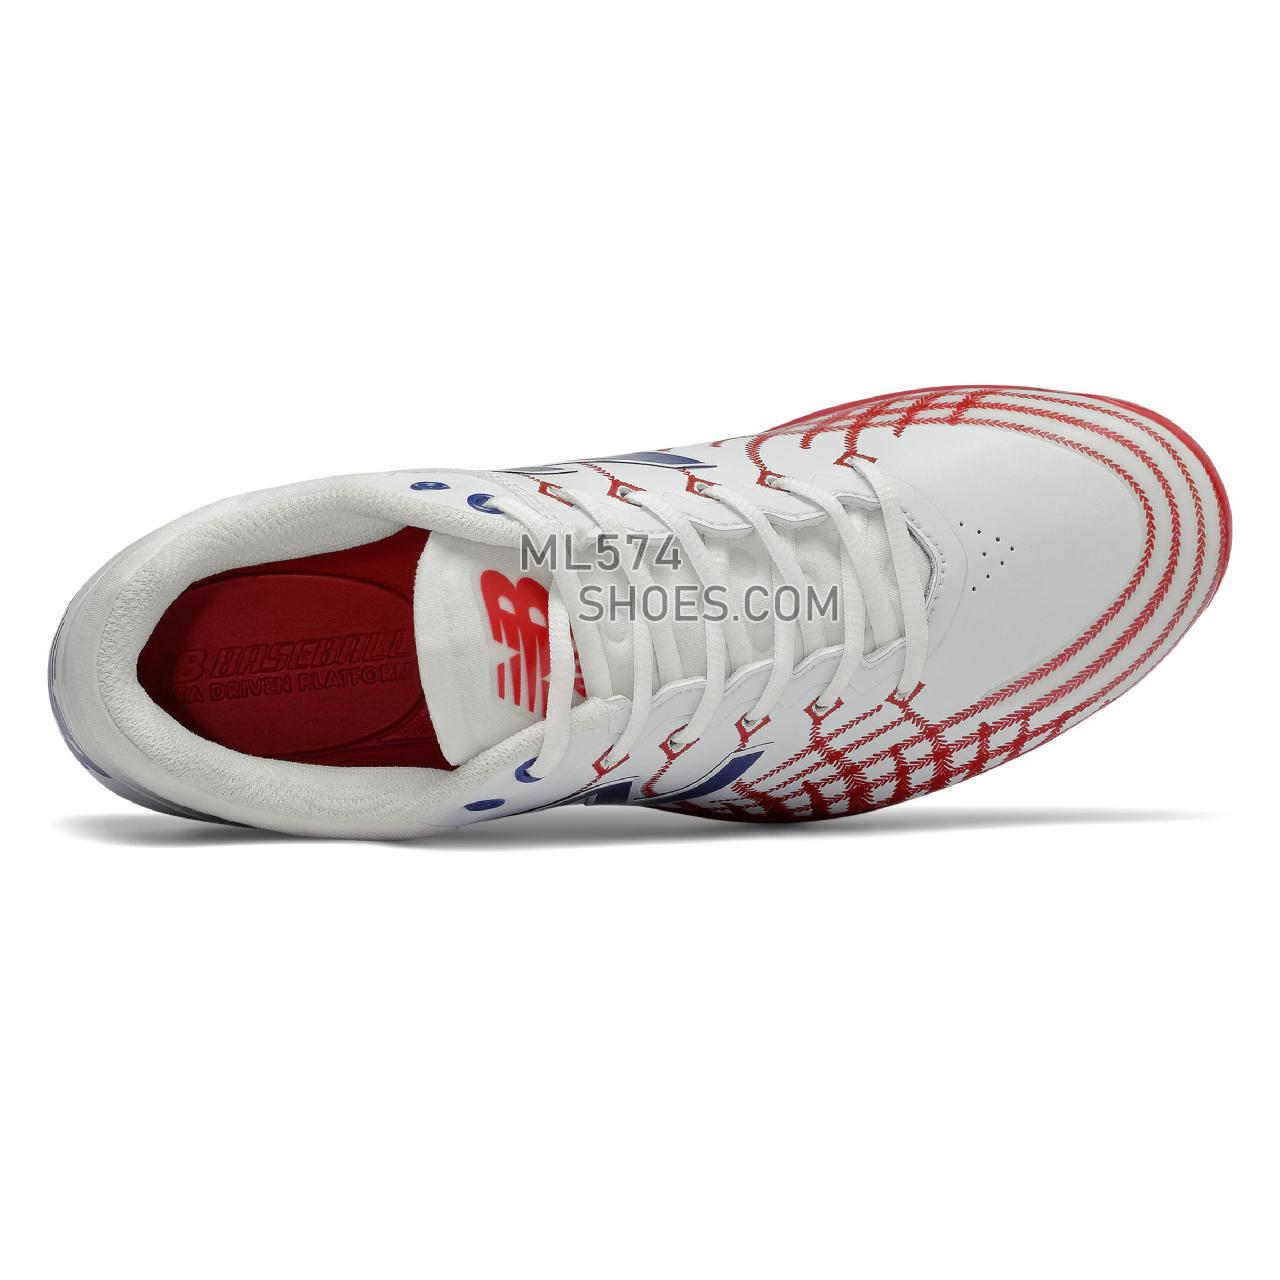 New Balance 4040v5 - Men's Baseball Turf - Red with Royal Blue and White - PL4040PR